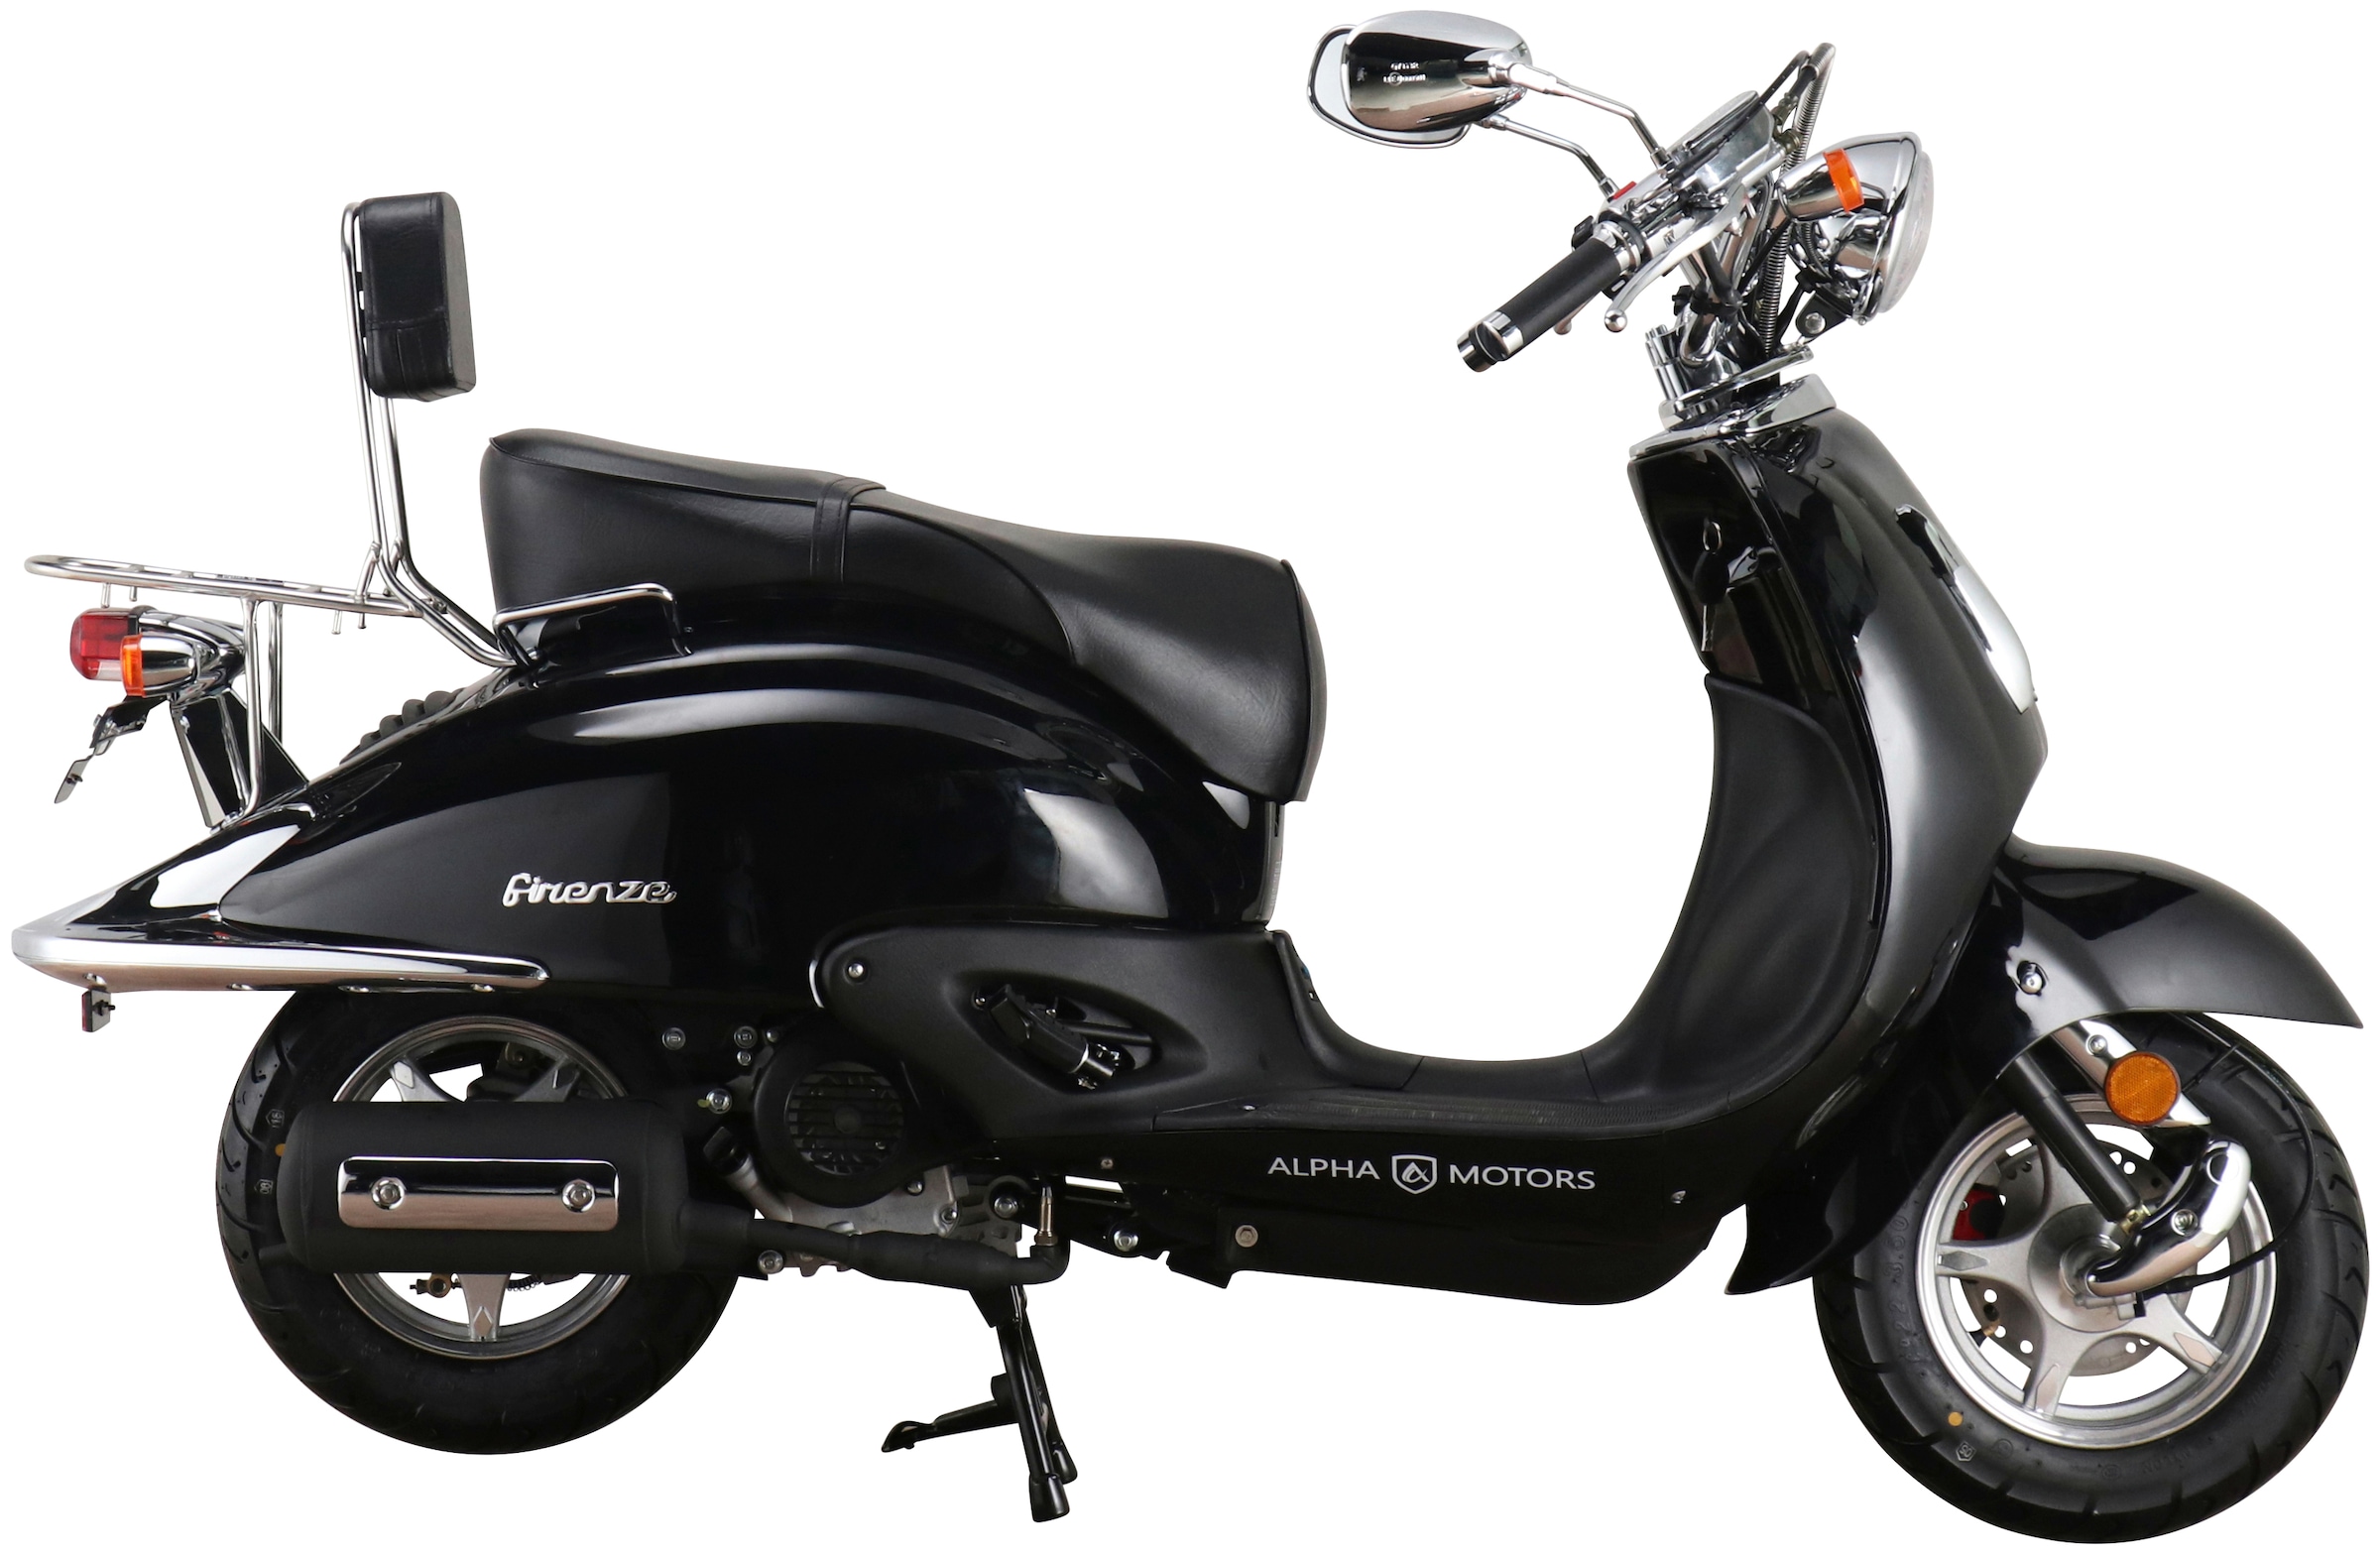 Alpha Motors Motorroller »Retro Firenze«, 125 cm³, 85 km/h, Euro 5, 8,56 PS, im Retro-Look